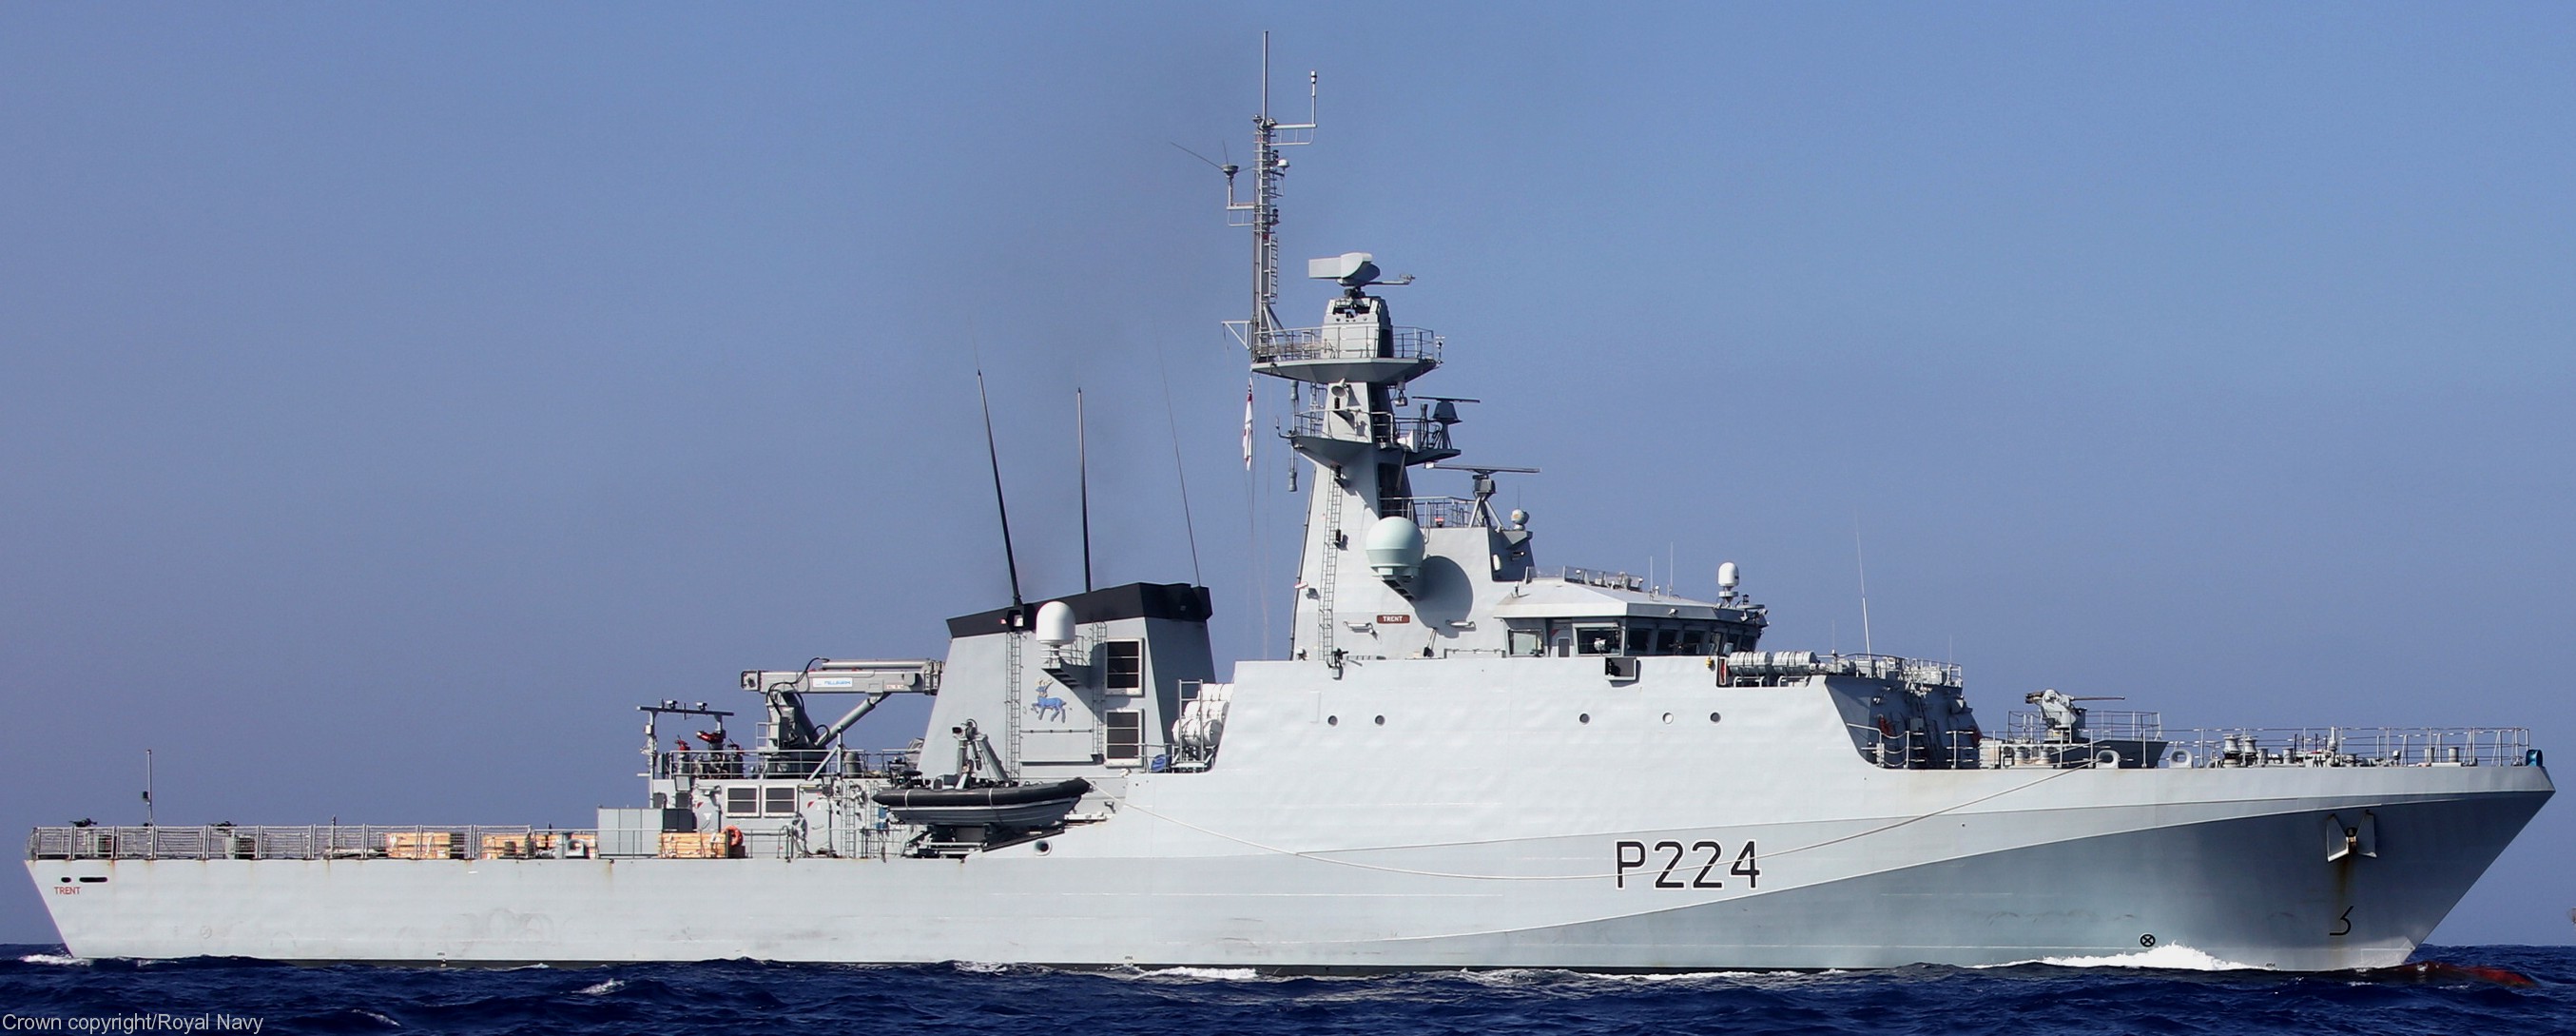 p-224 hms trent river class offshore patrol vessel opv royal navy 16